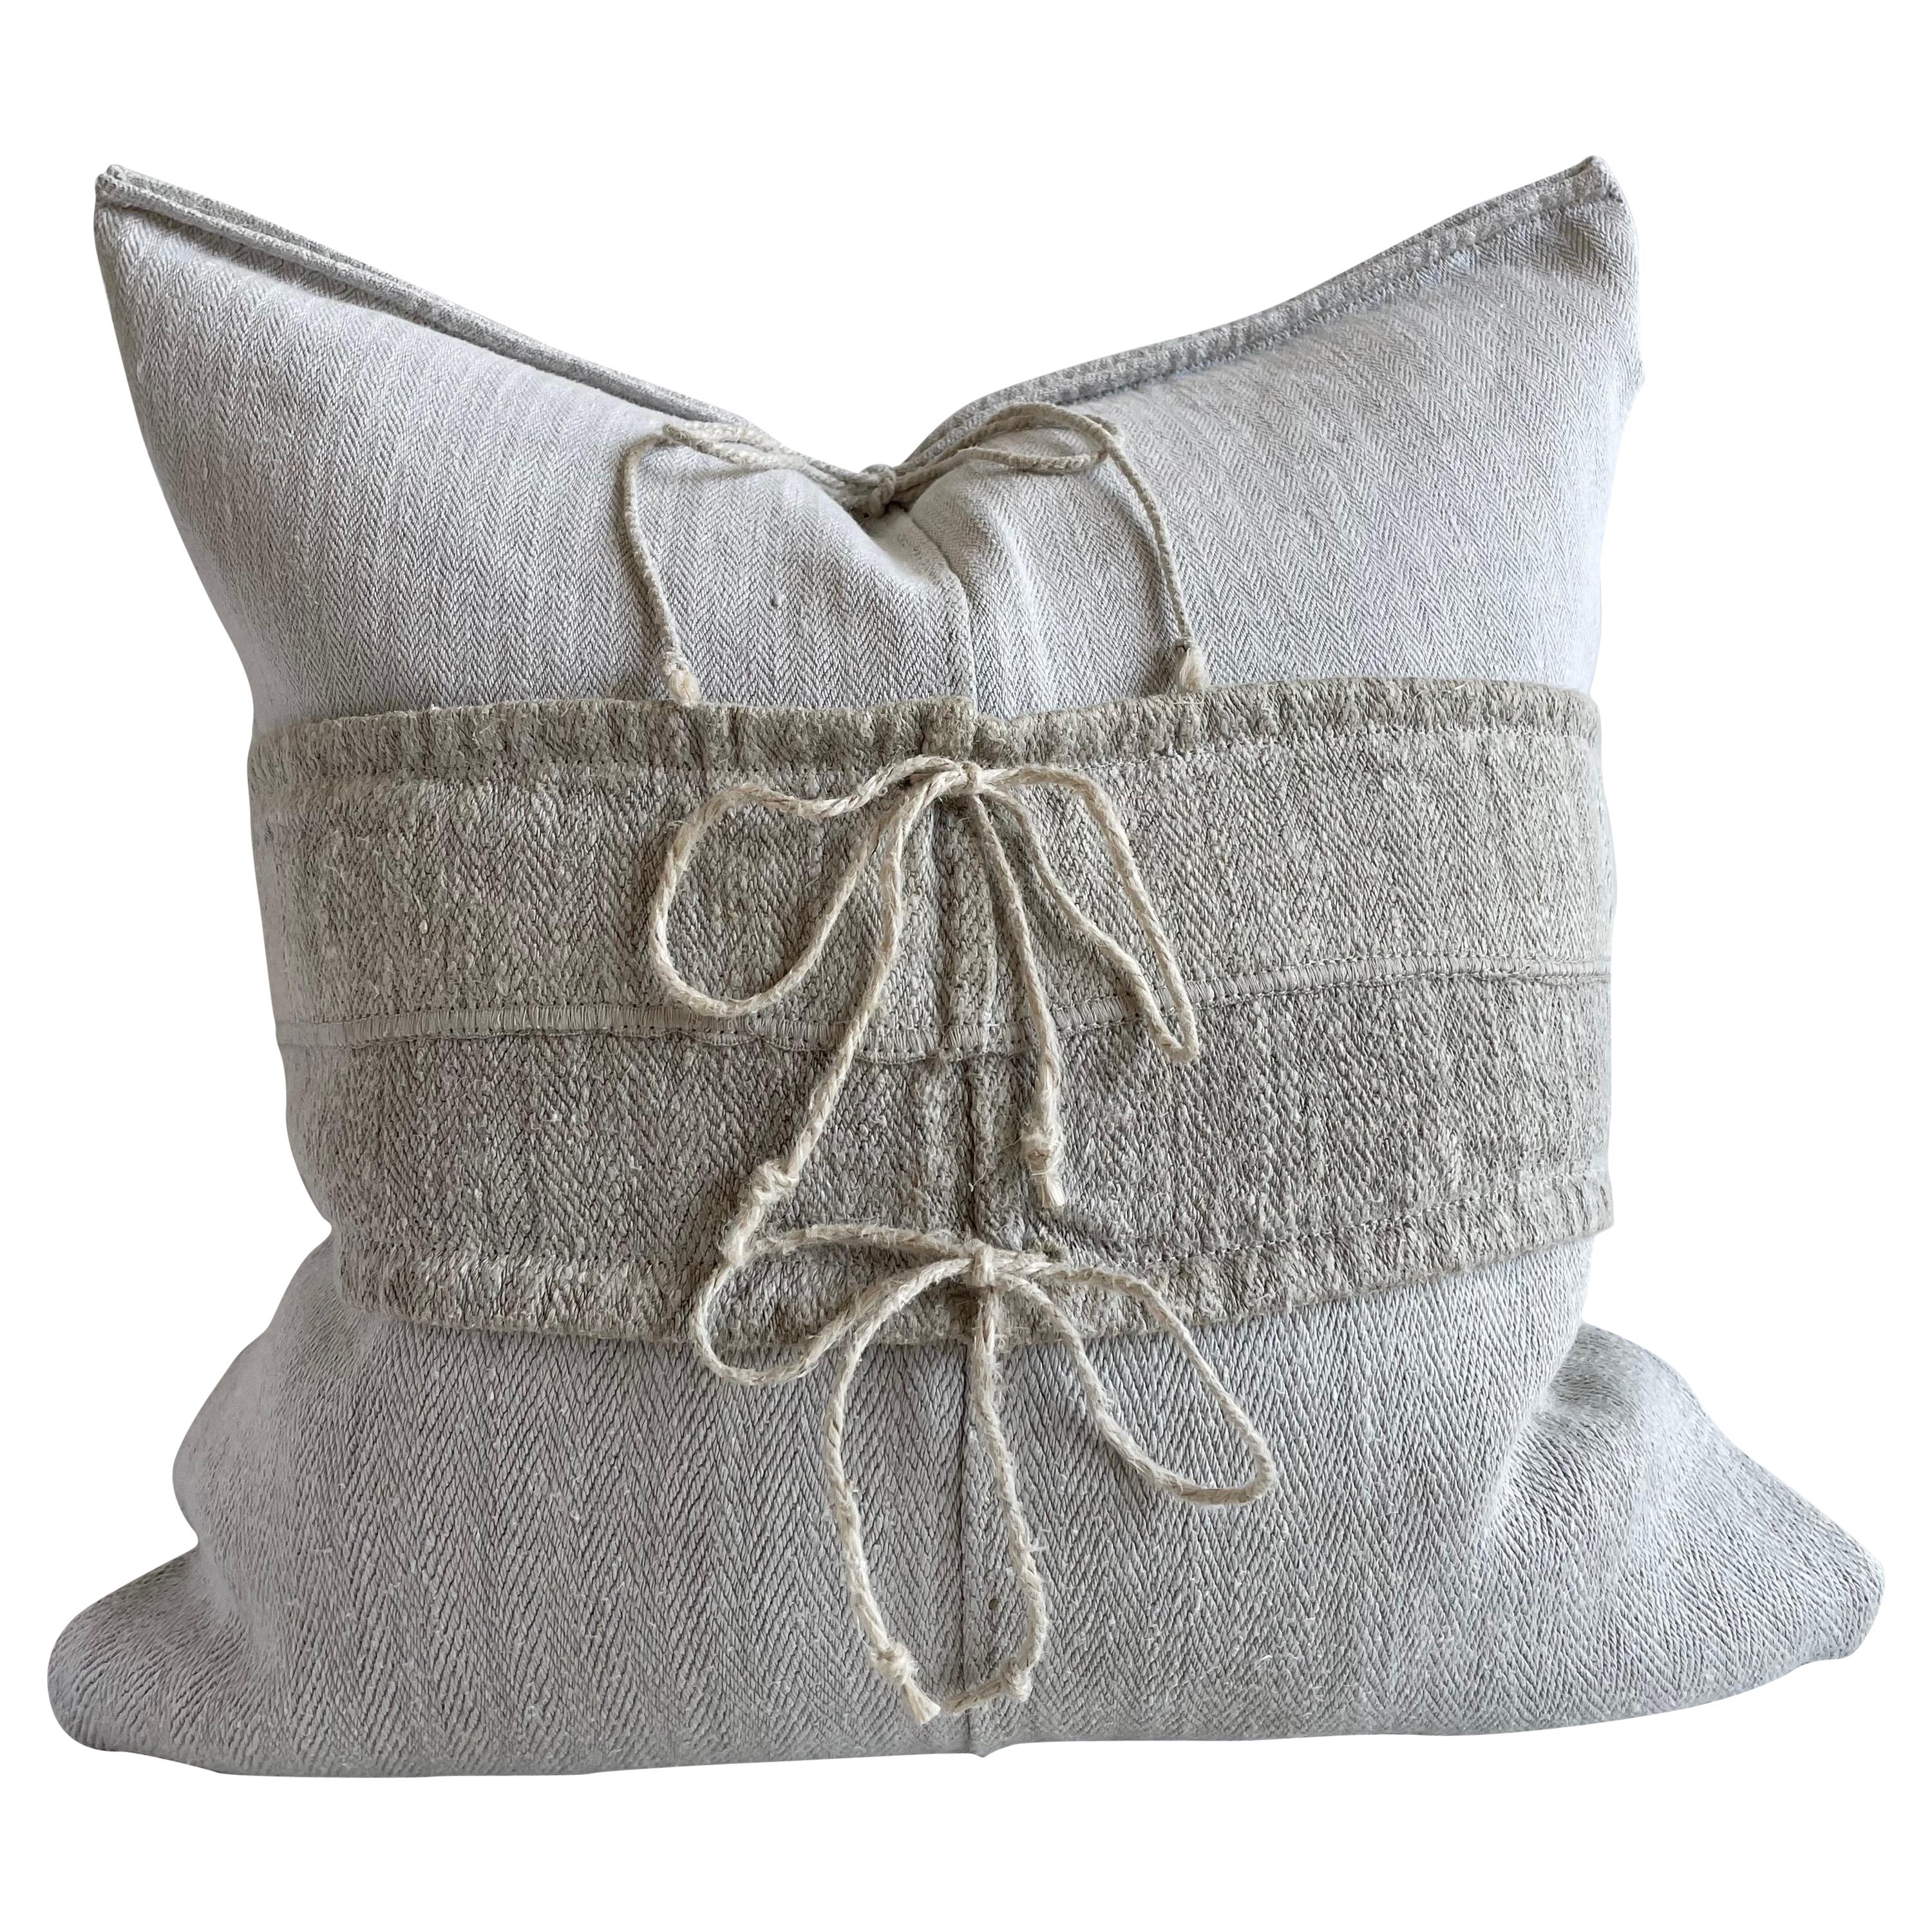 Vintage European Grain Sack Pillow with Insert